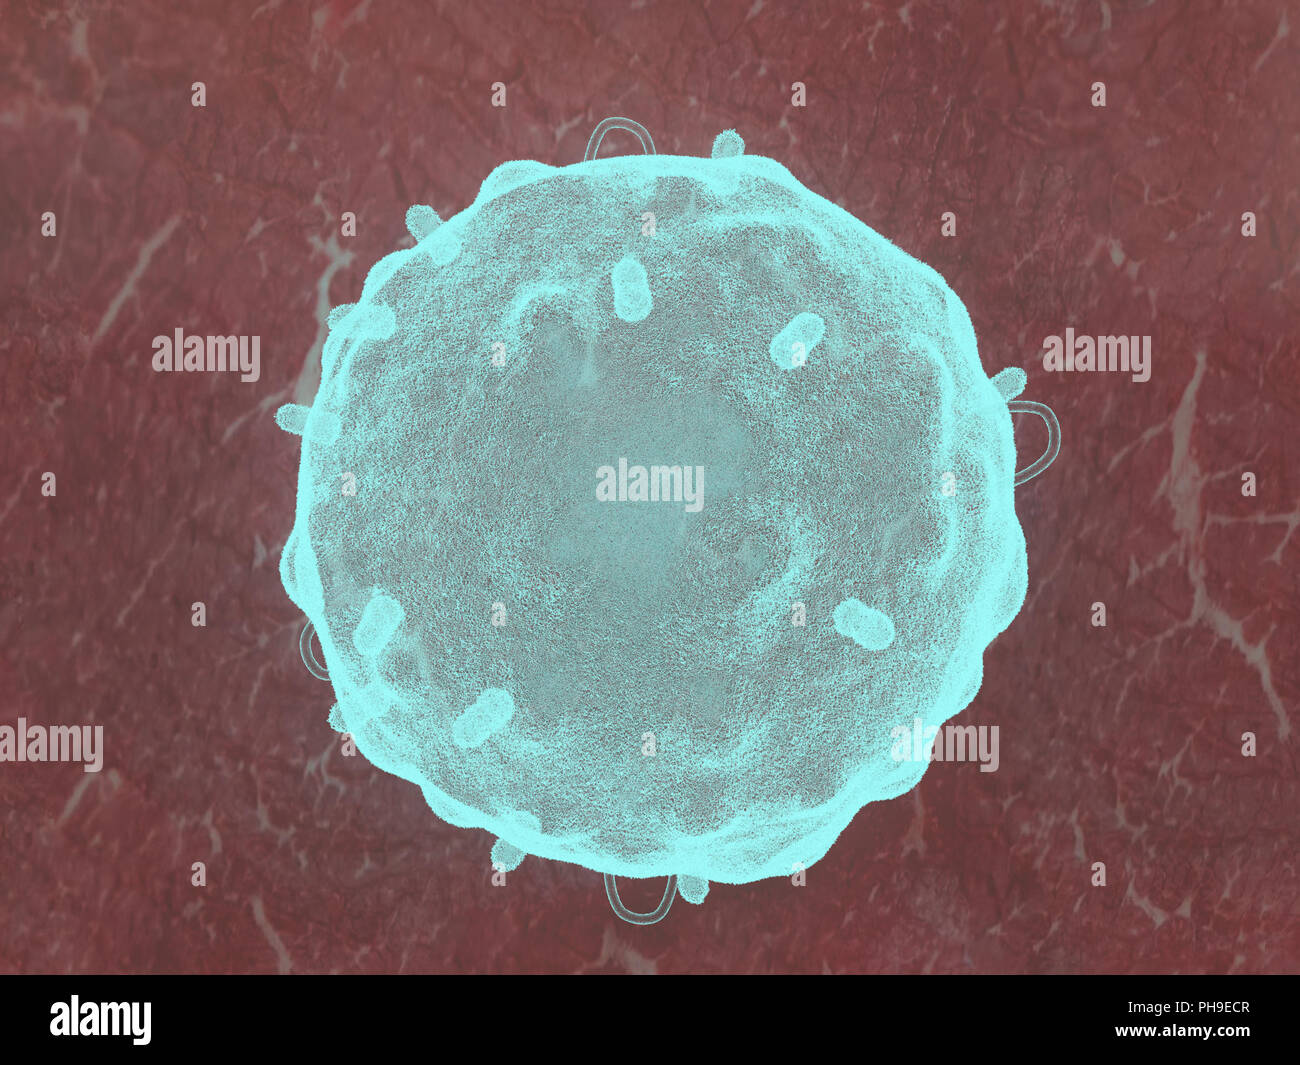 Plasma cell, lymphocyte Stock Photo